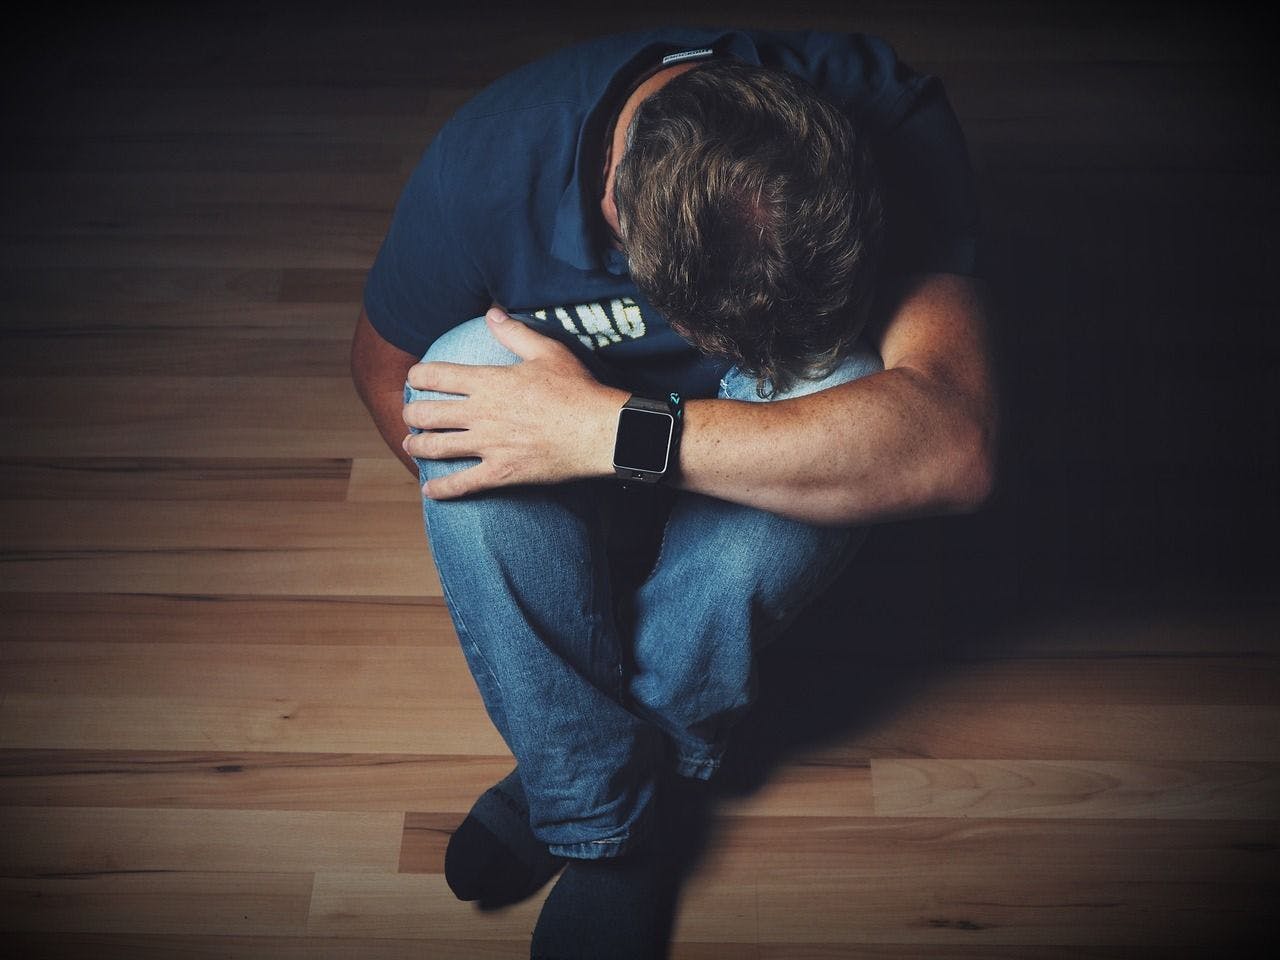 Depressed man on floor. | Credit: HolgersFotografie | Pixabay